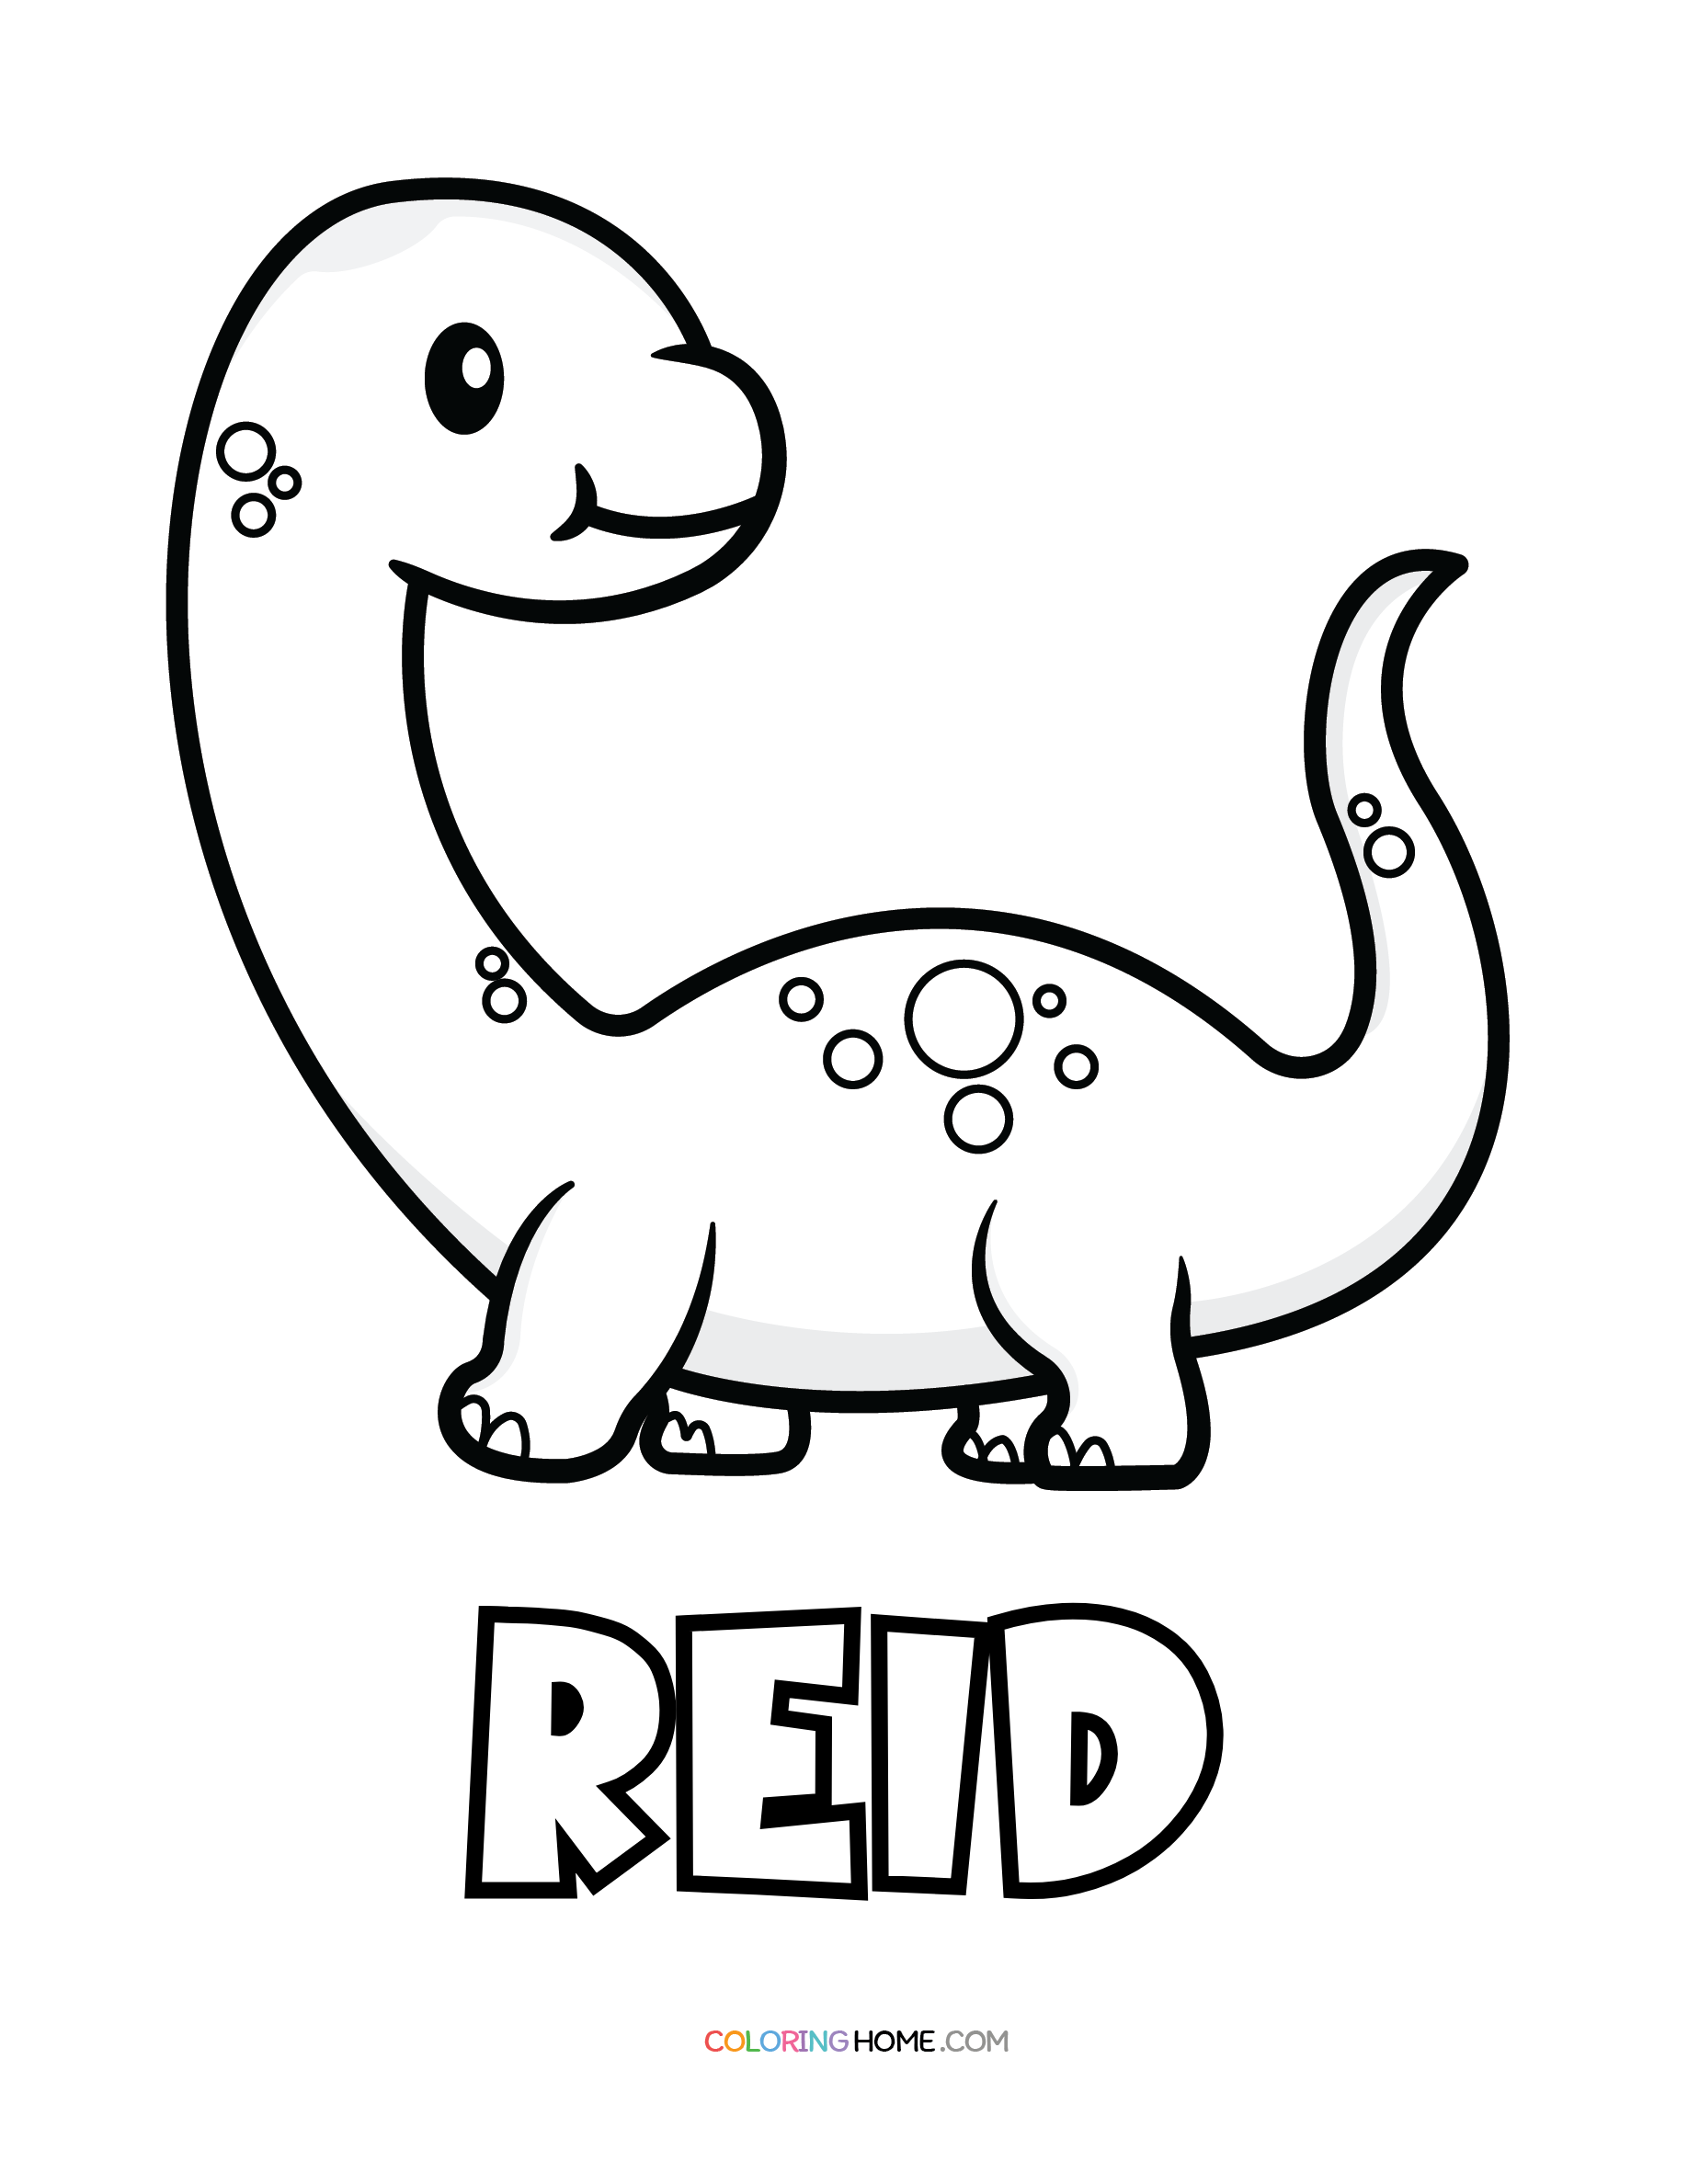 Reid dinosaur coloring page